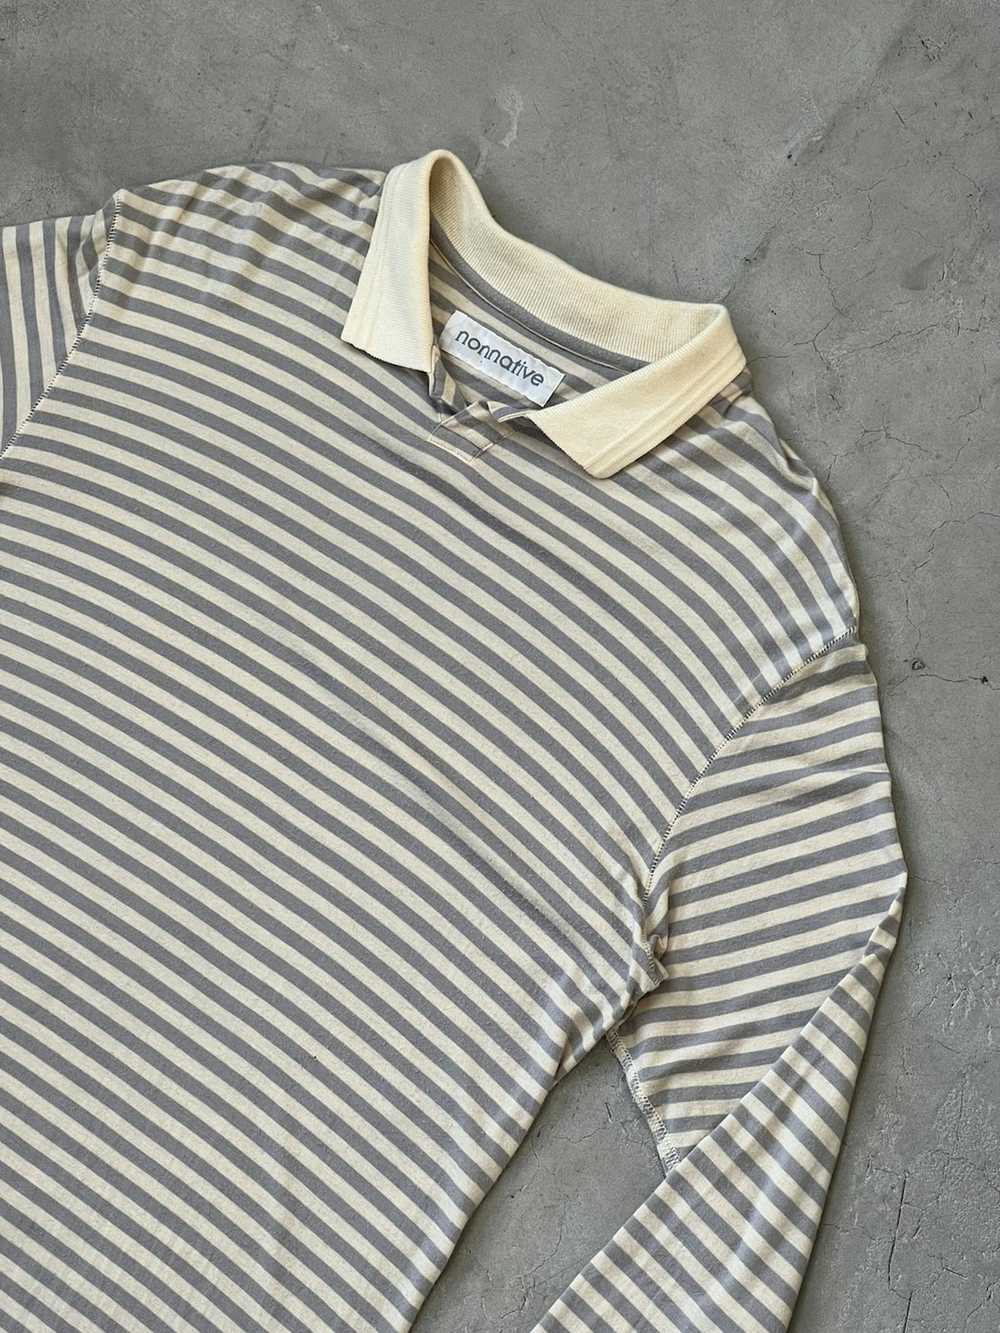 Nonnative Nonnative Soft Striped LongSleeve Polo - image 3